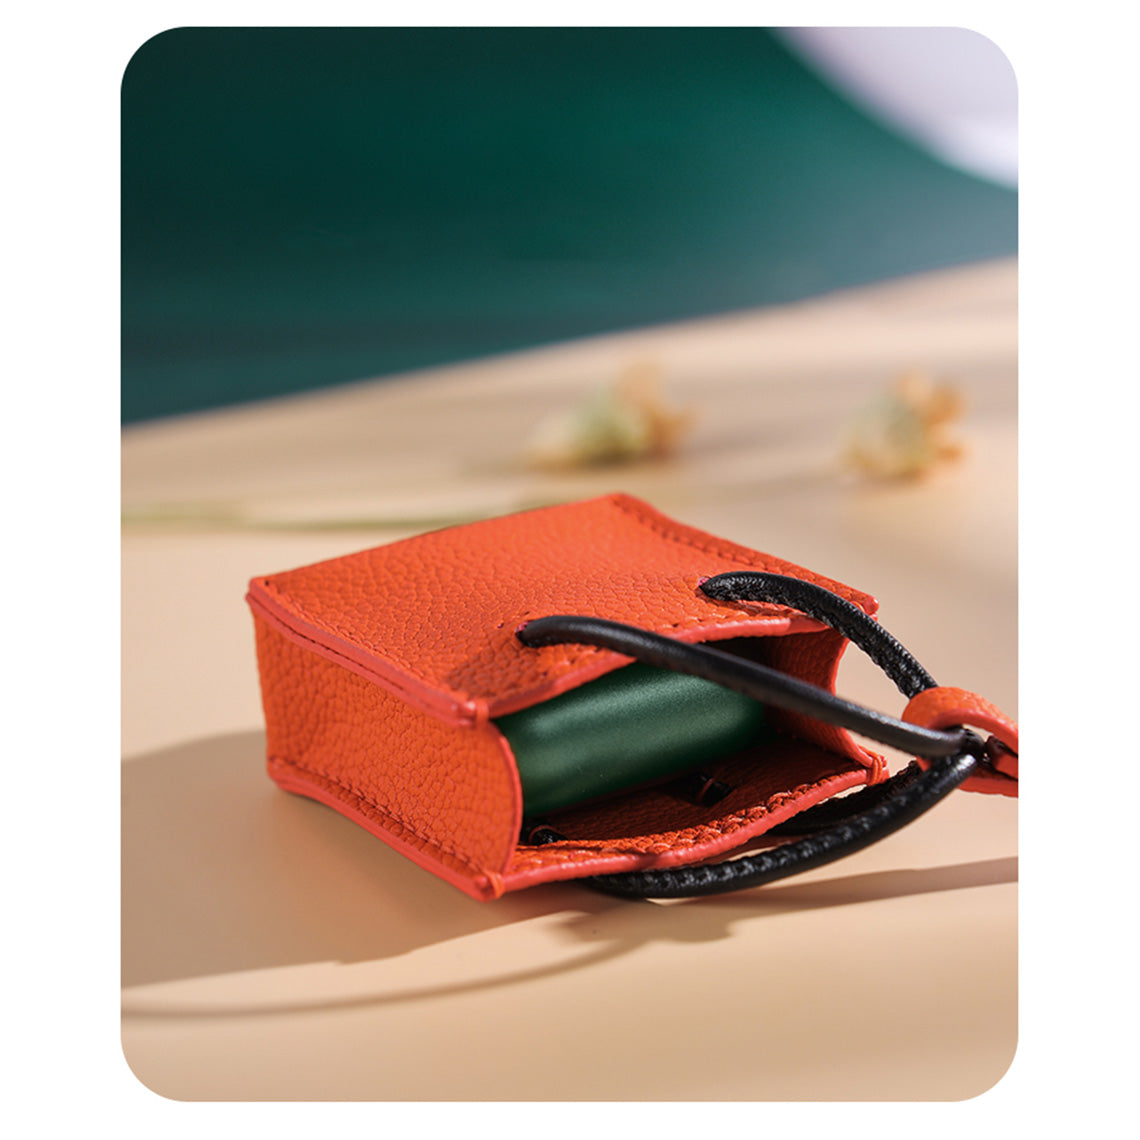 Designer tote bag charm | Handmade purse charm, Airpods holder/earphones protective case